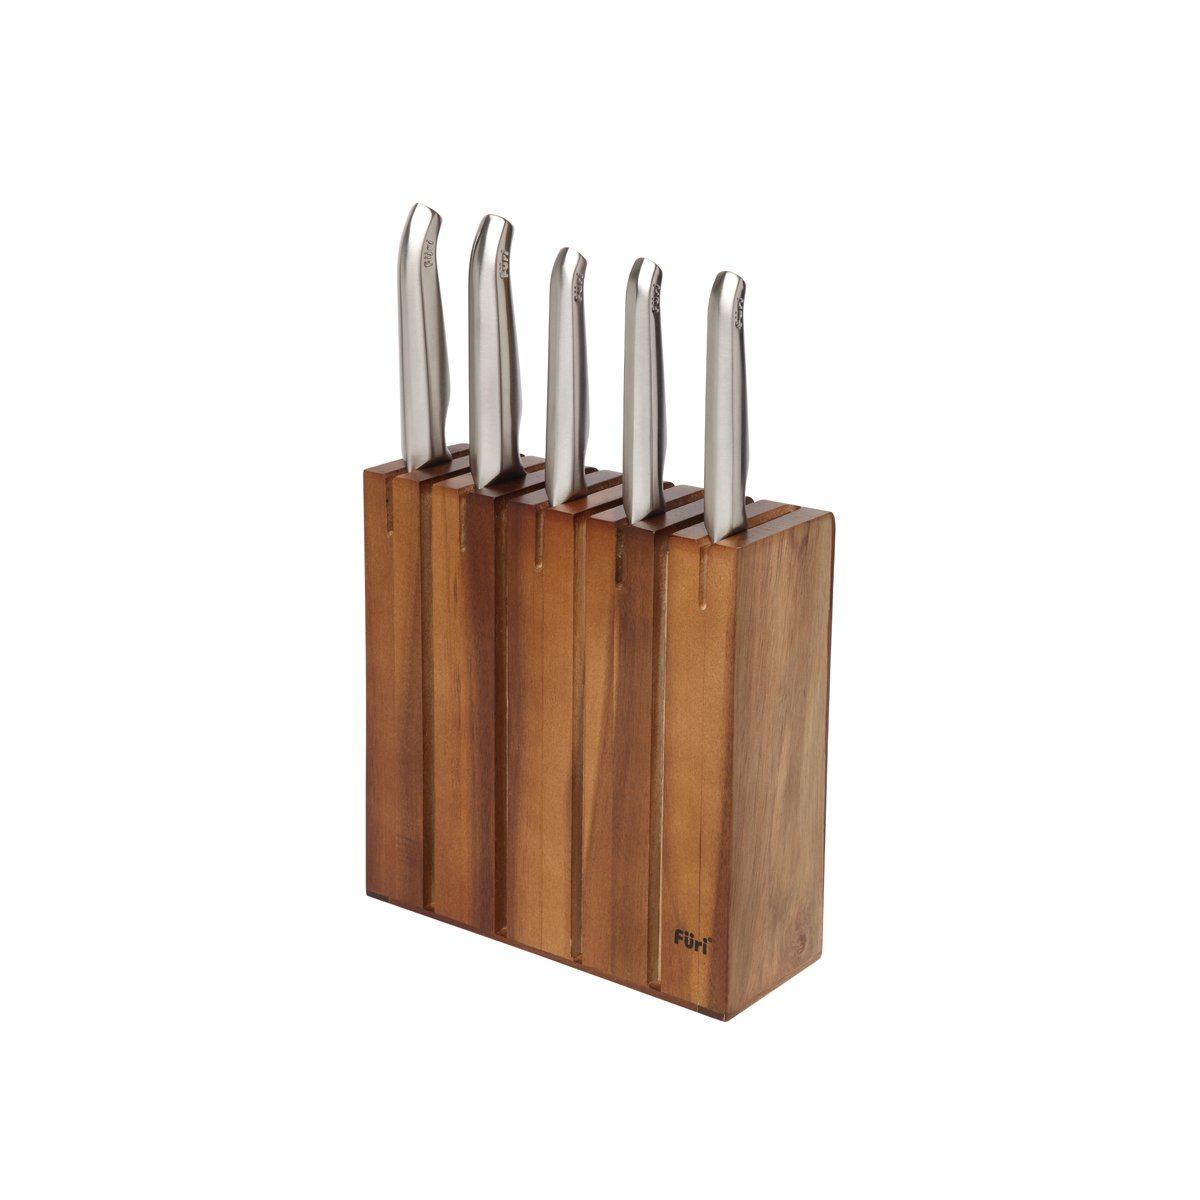 27134 Furi Pro Acacia Wood Knife Block Set 6pc Tomkin Australia Hospitality Supplies